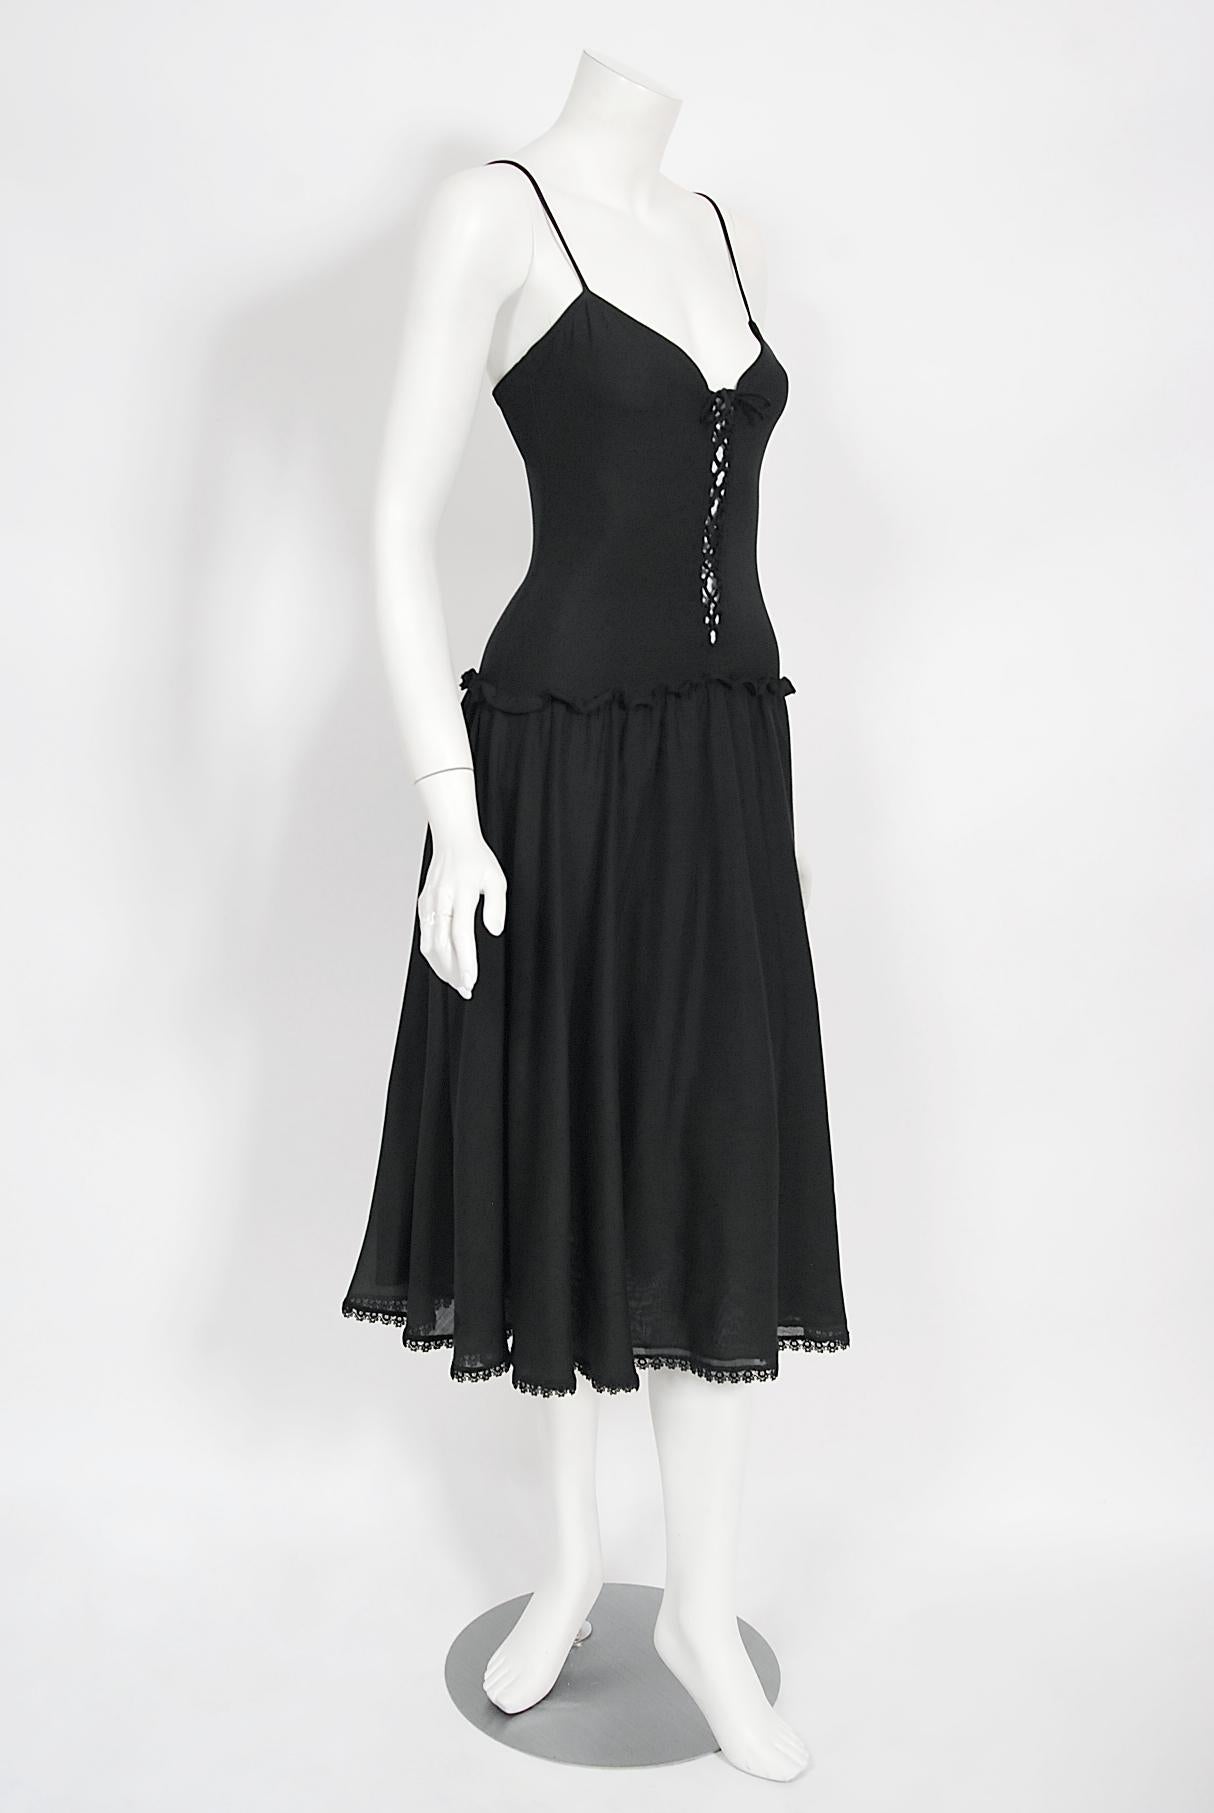 Women's Vintage 1977 Sant Angelo Documented Black Jersey Lace-Up Bodysuit Dress & Shawl For Sale